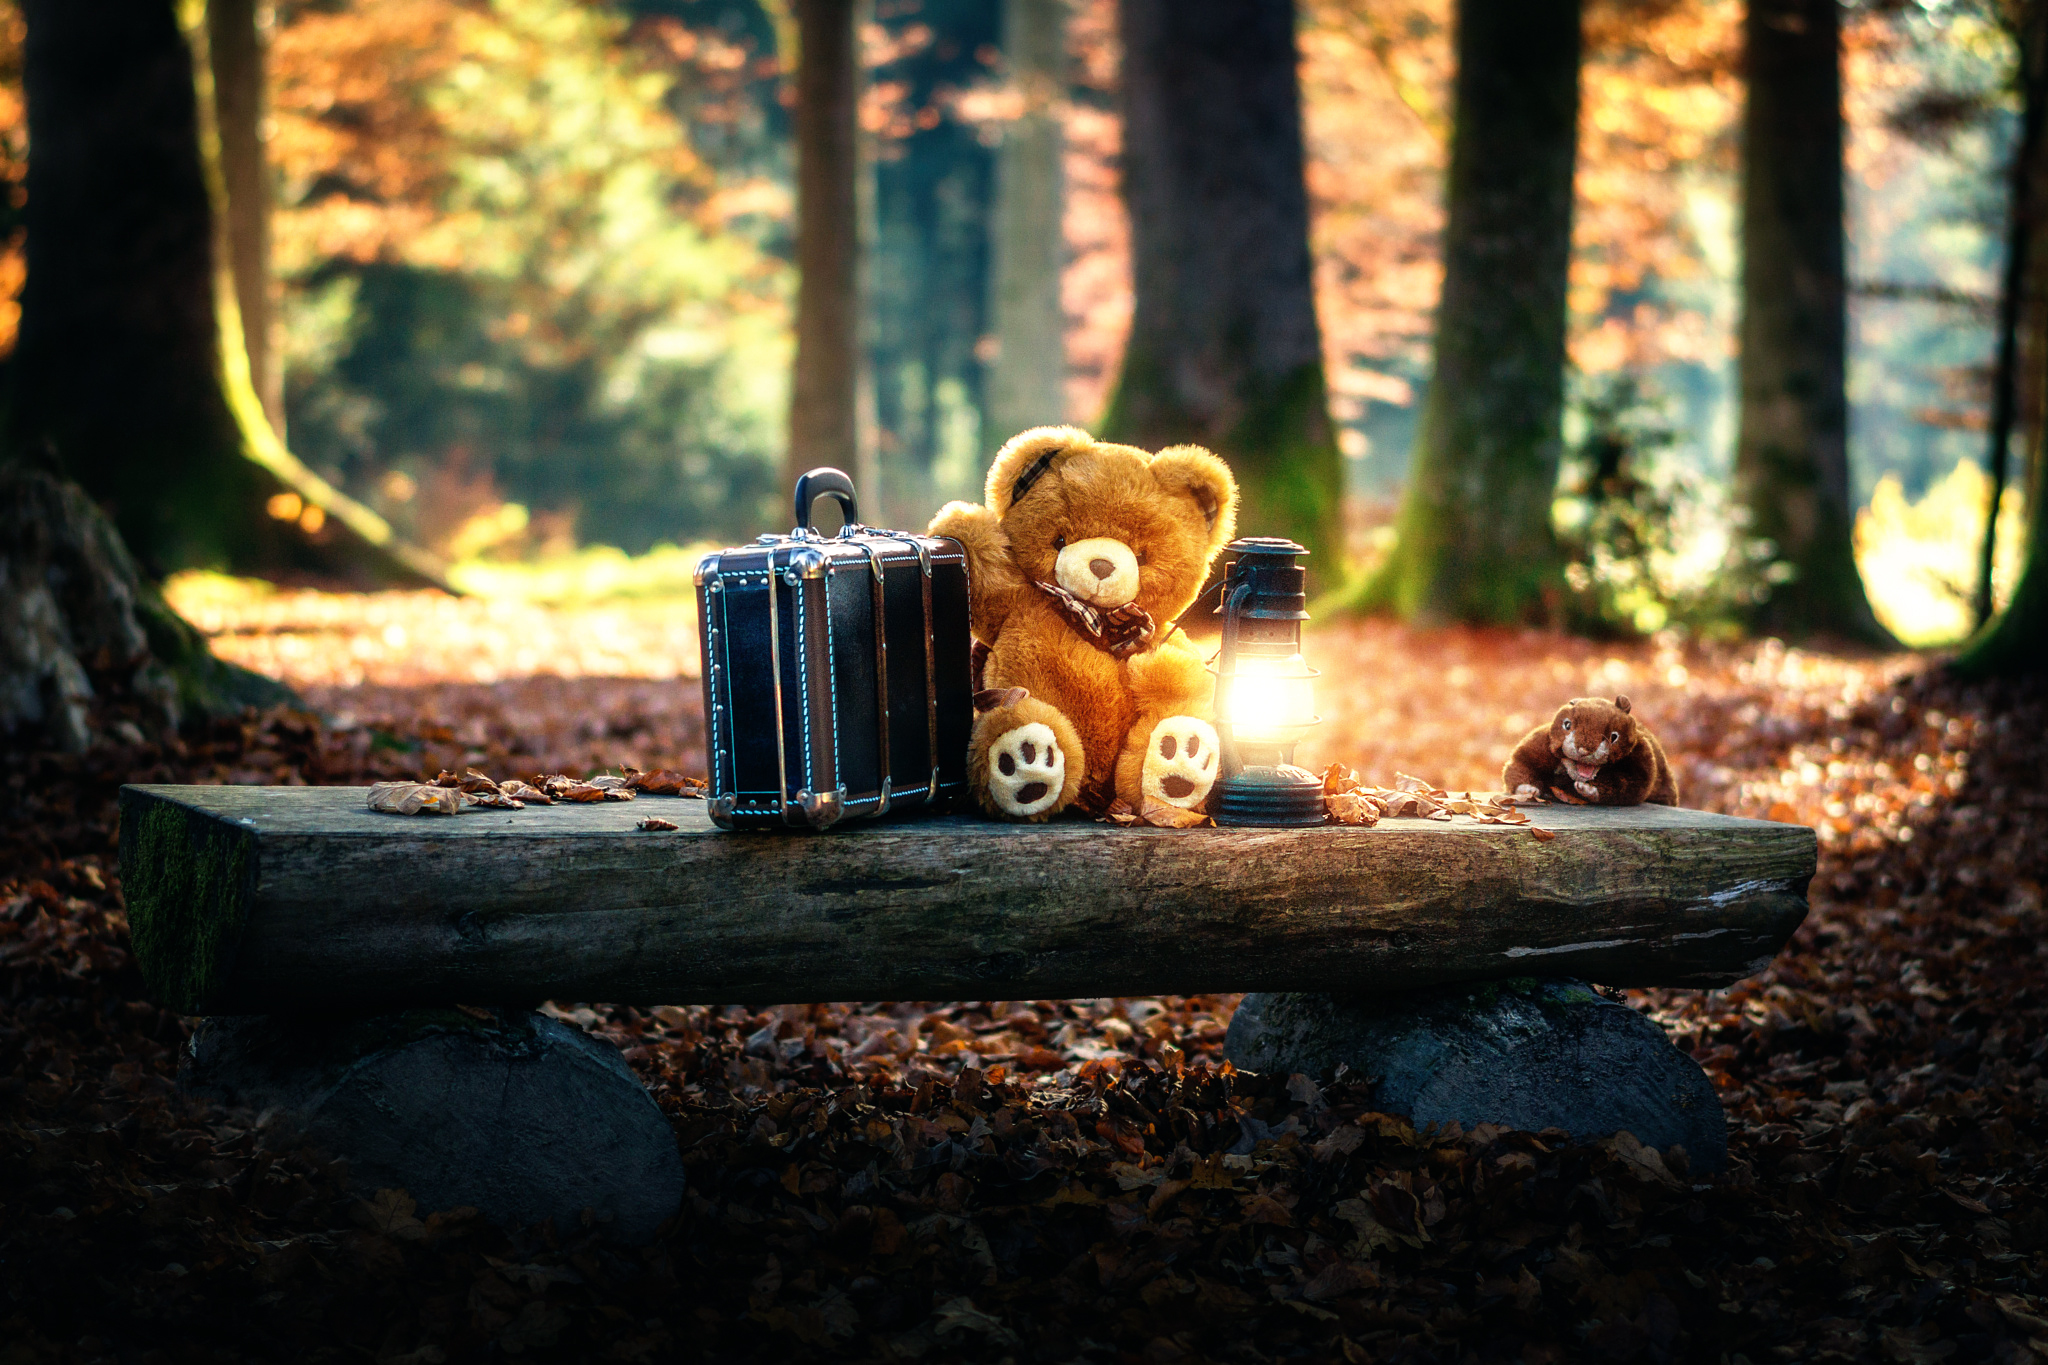 teddy bear, man made, stuffed animal, bench, lantern, suitcase High Definition image